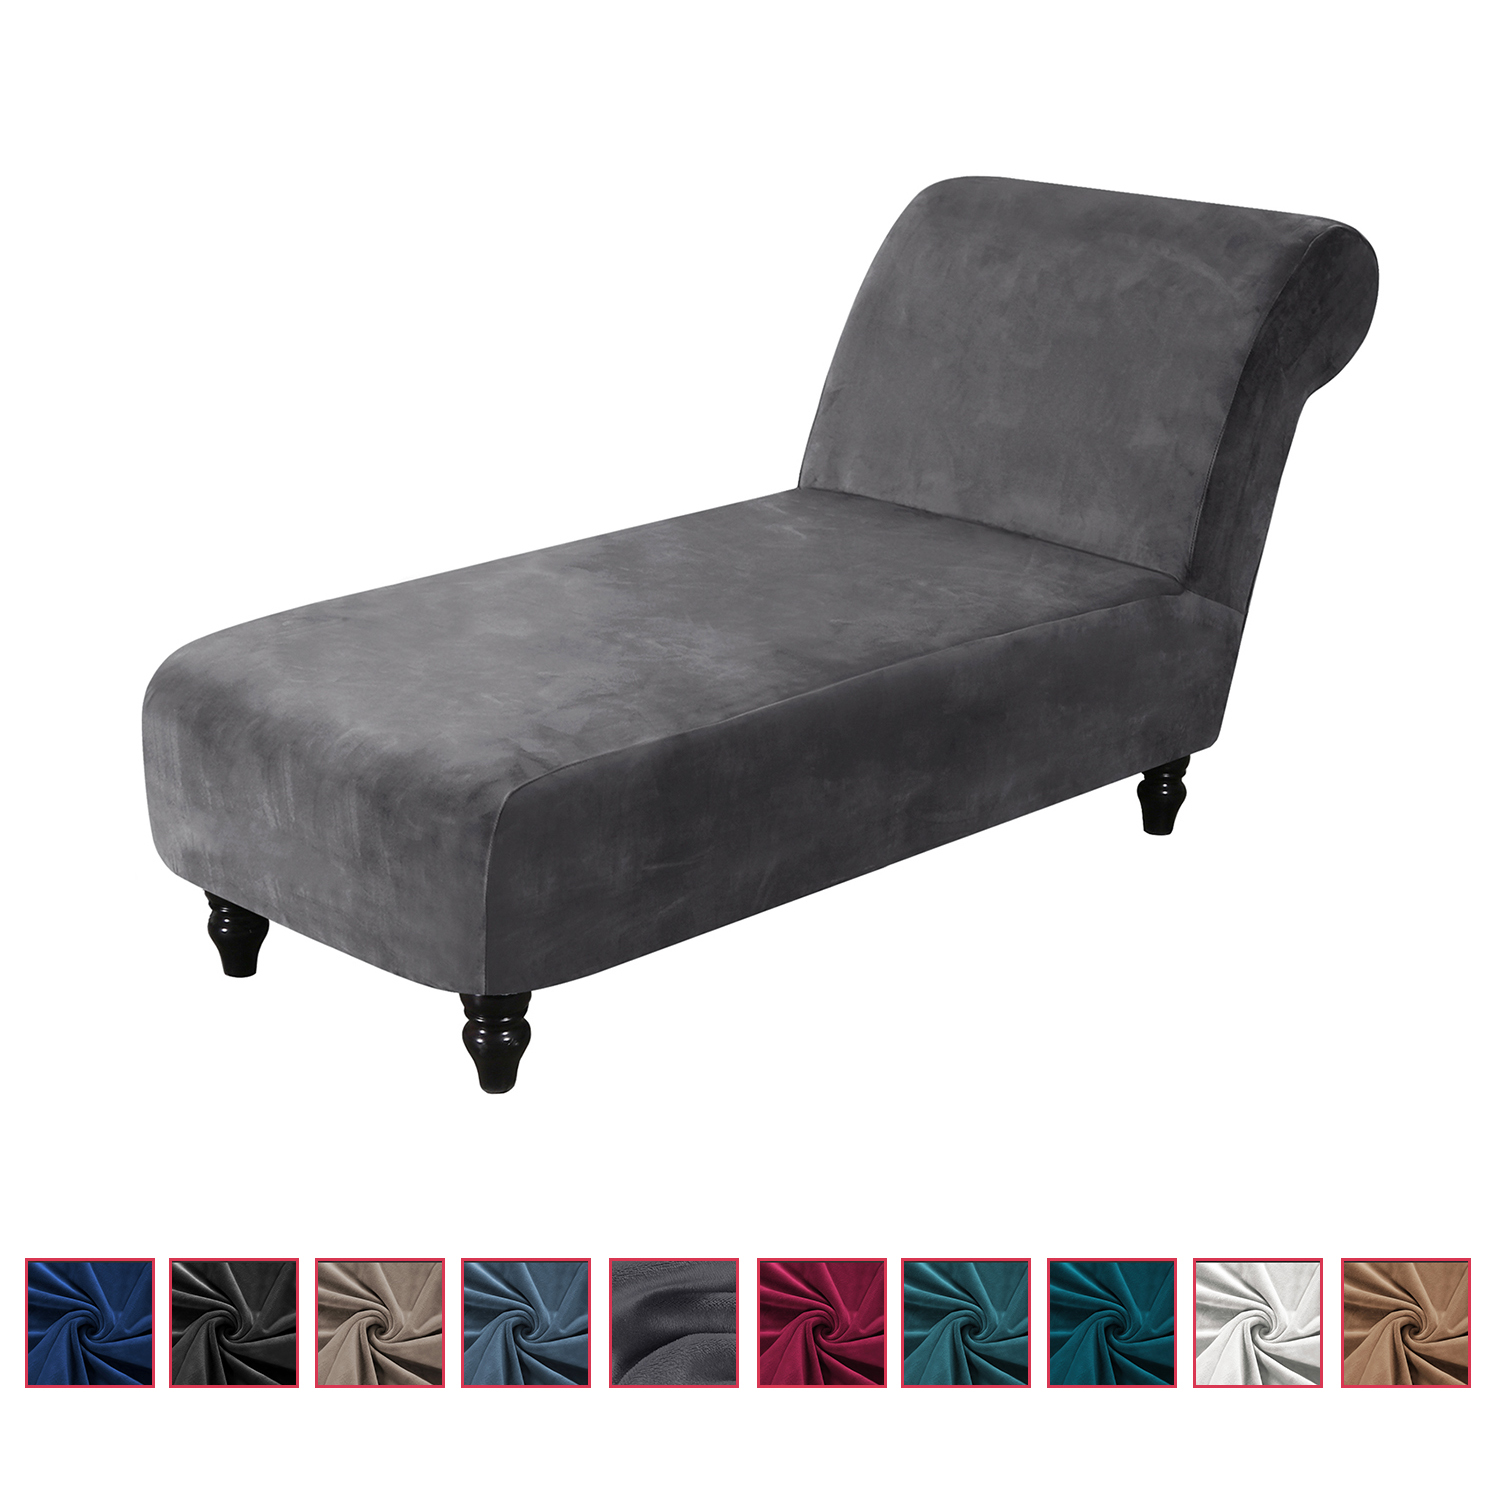 CJC Velvet Armless Lounge Chaise Slipcover Stretch Chaise Couch Cover Lounge Chair Sofa Slipcover Pet Furniture Cover - image 1 of 7